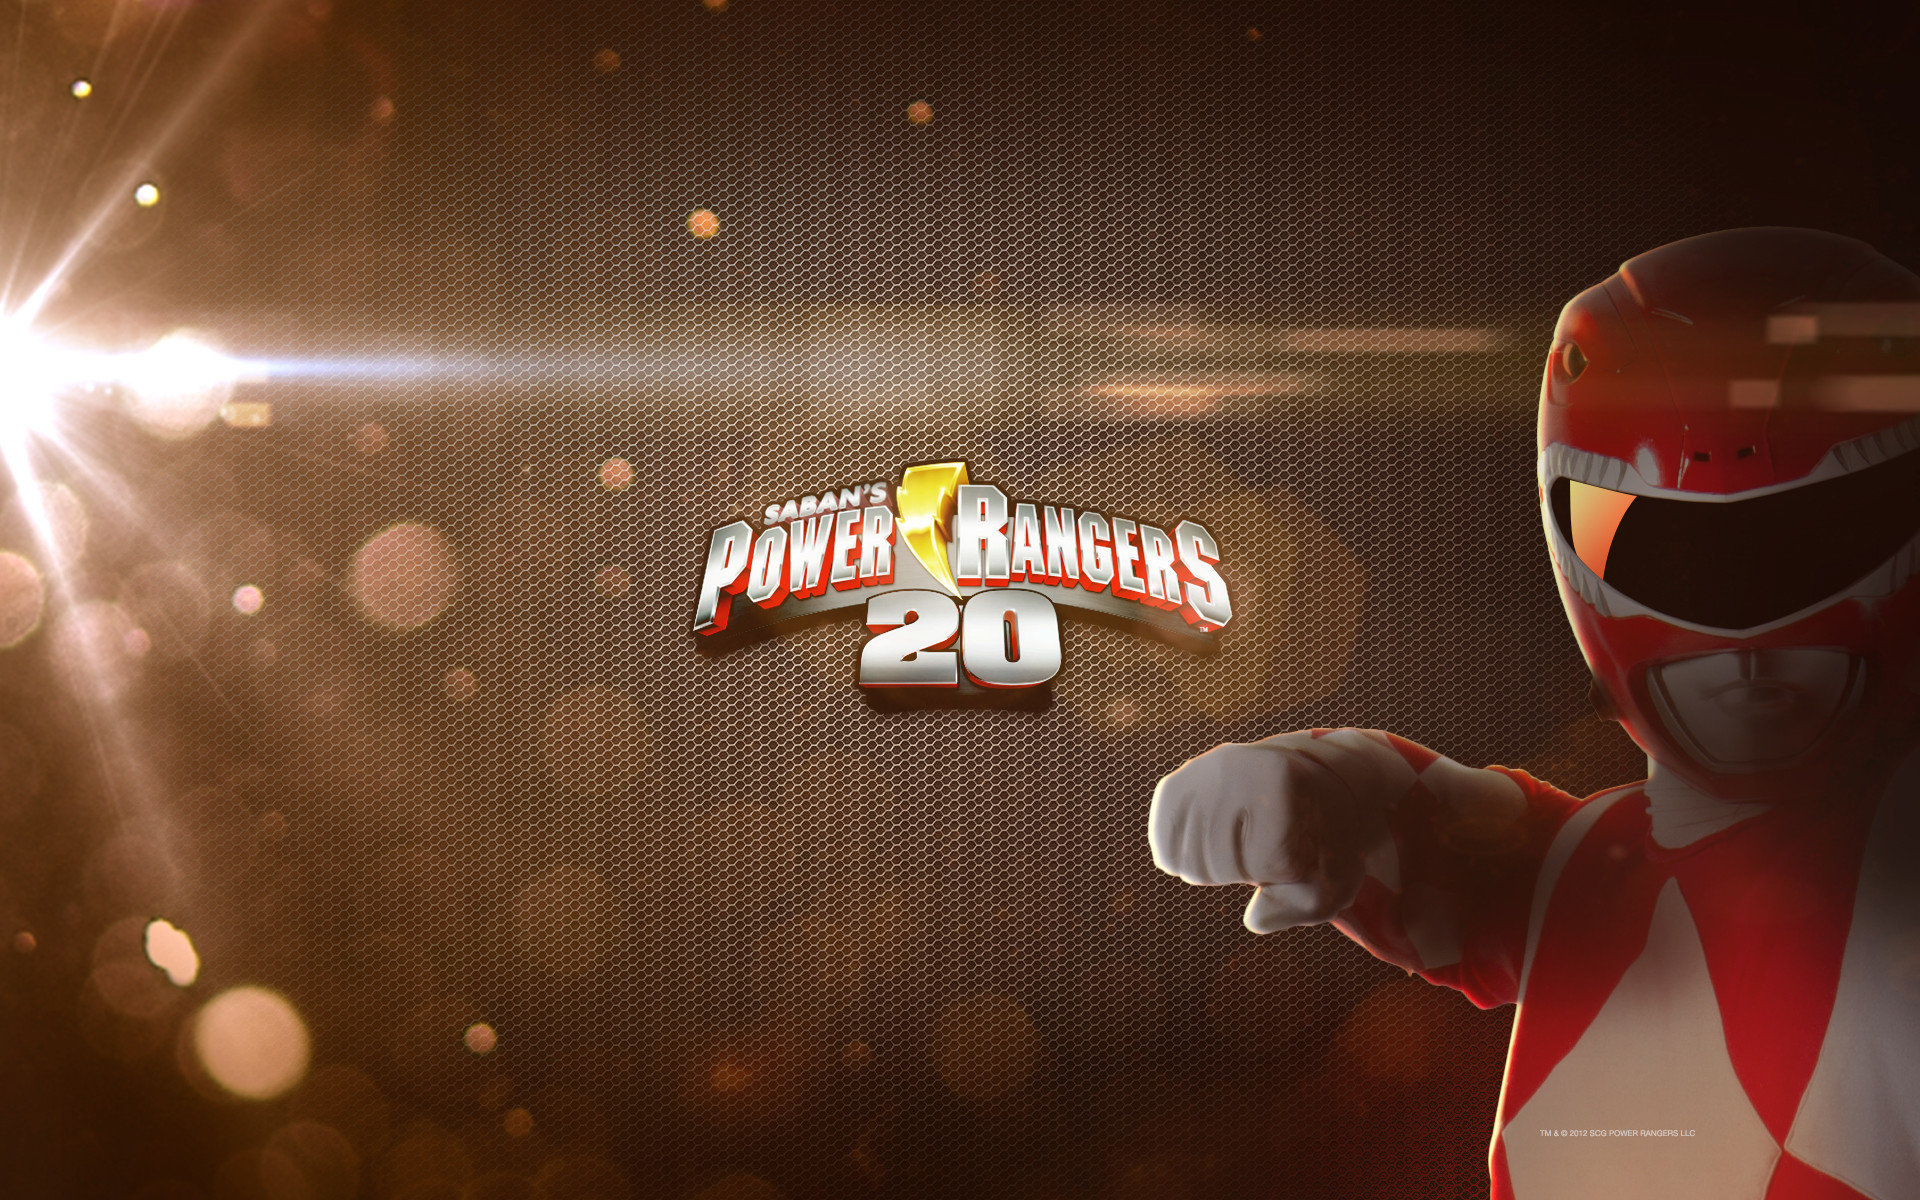 1920x1200 Power Rangers Res:  / Size:2120kb. Views: 179